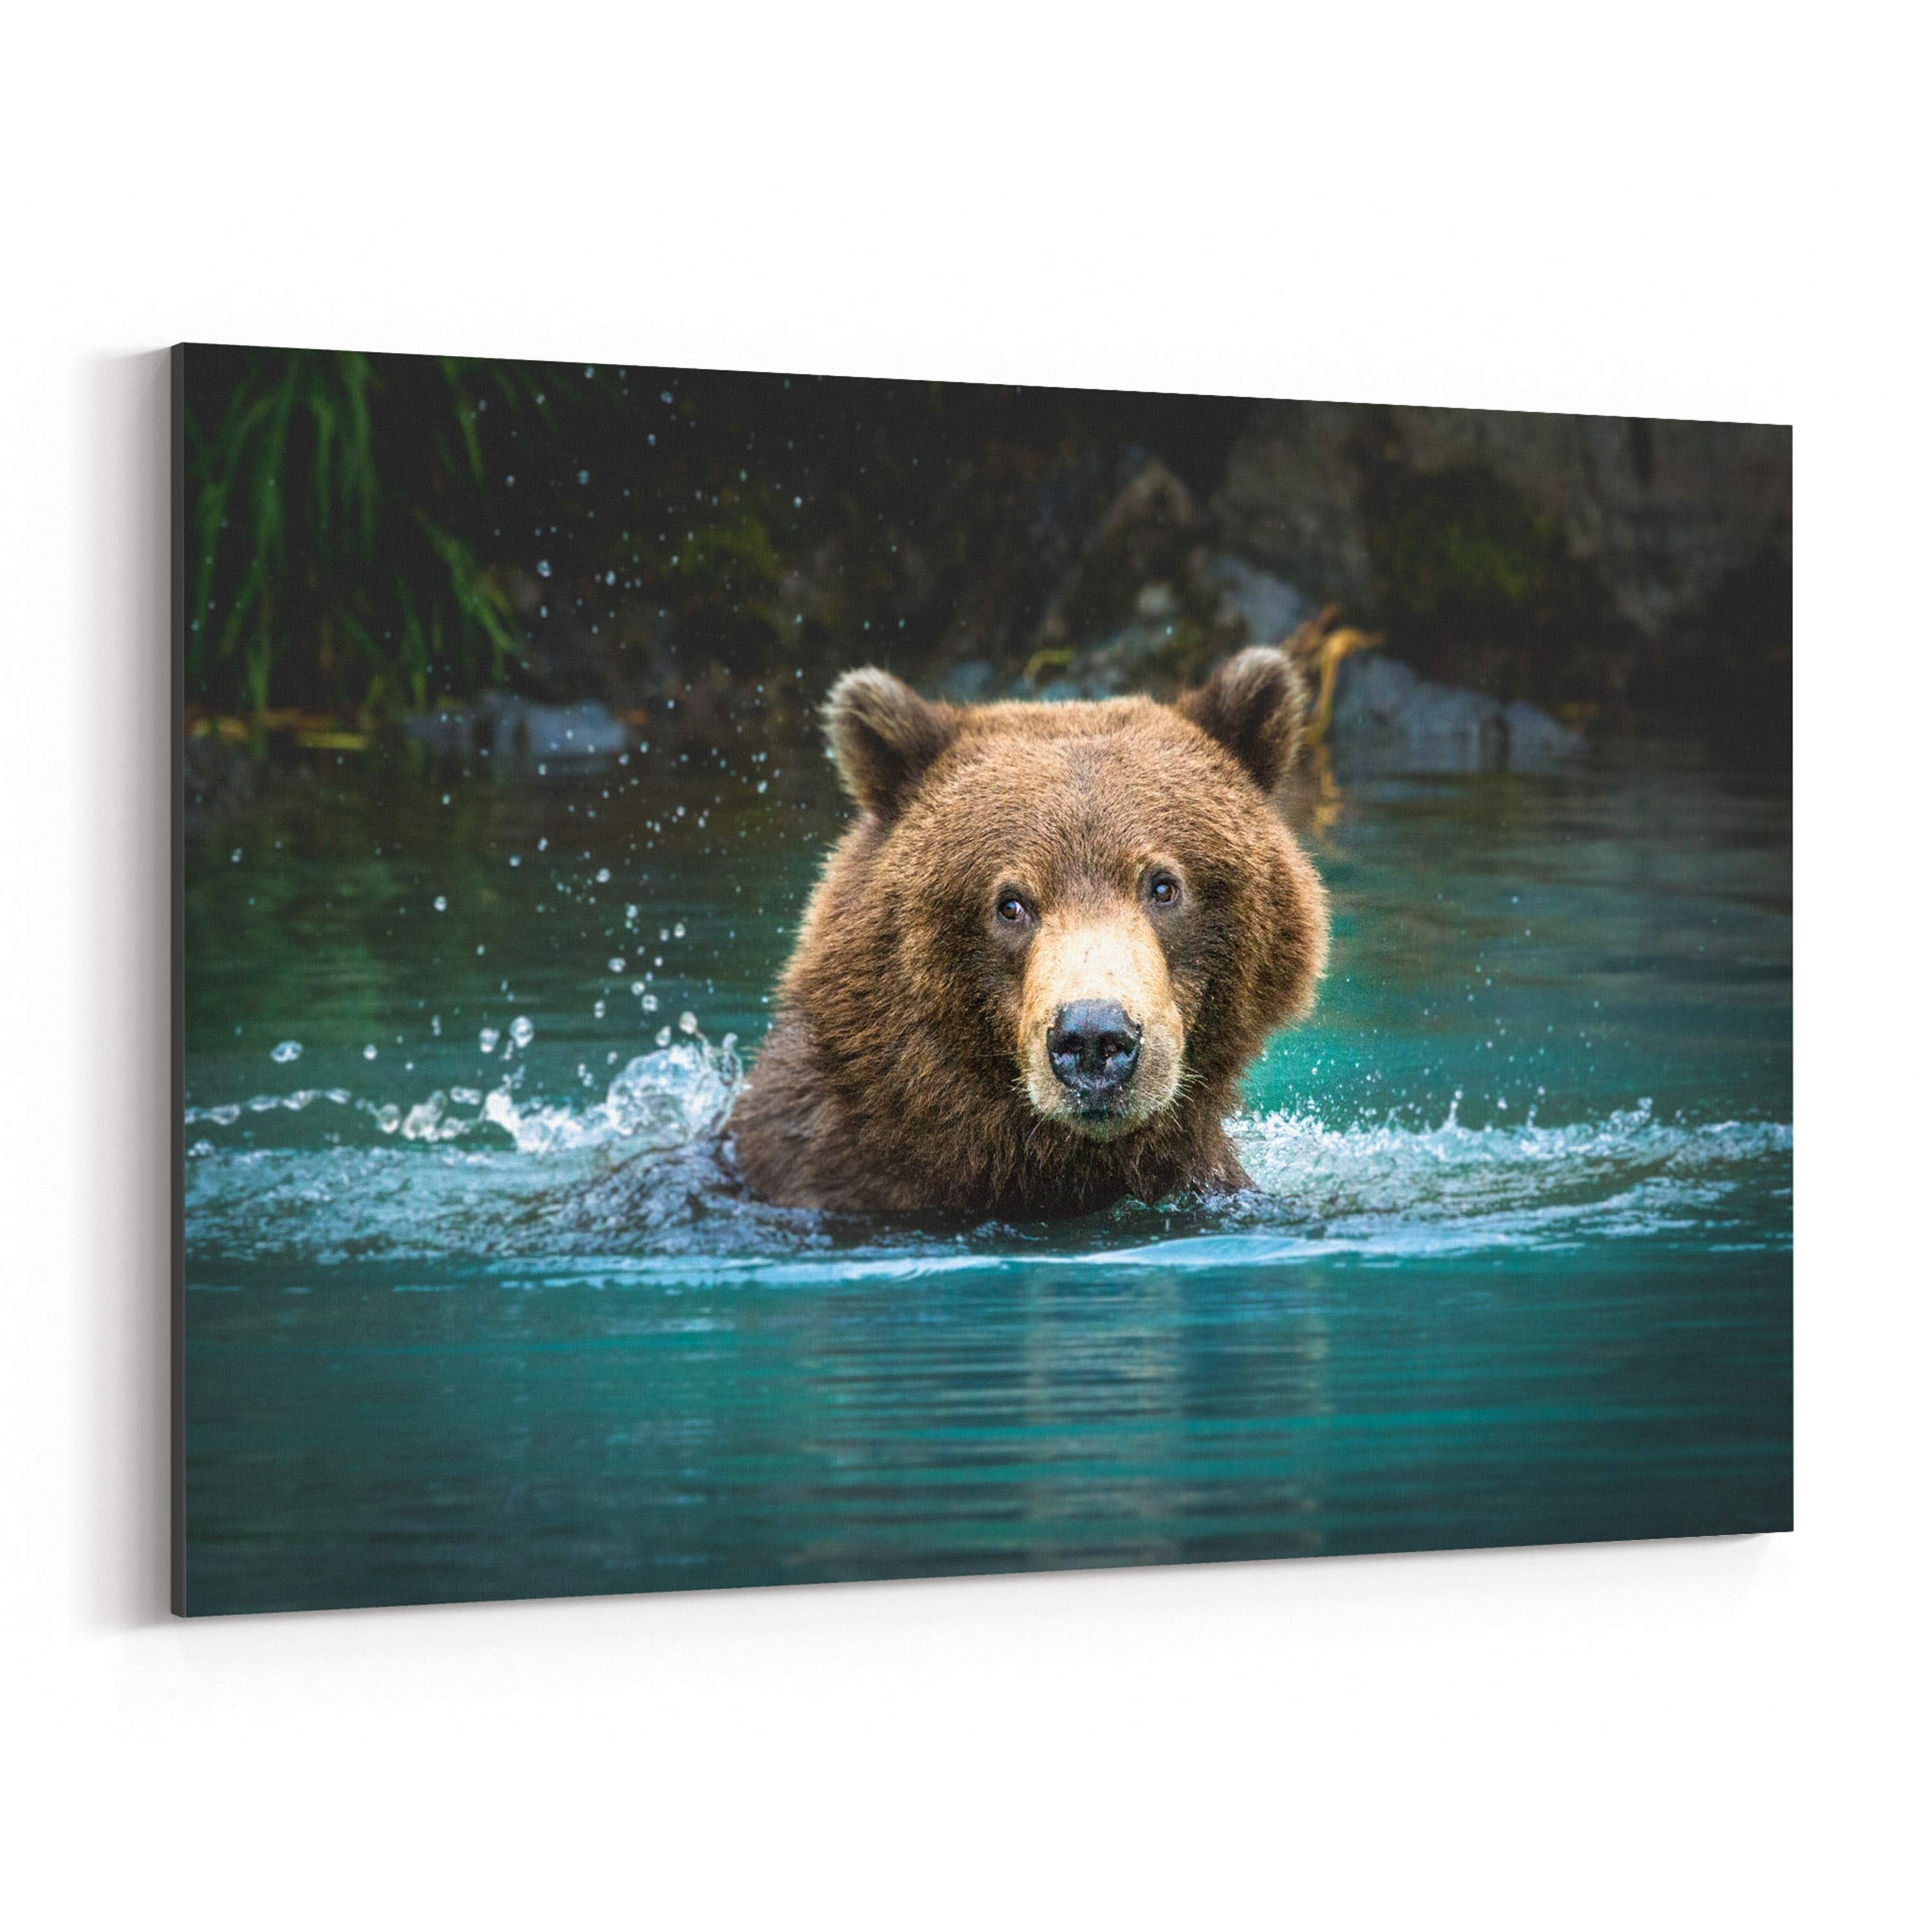 Shop Noir Gallery Grizzly Bear Wildlife Alaska Canvas Wall Art Print Overstock 27434545